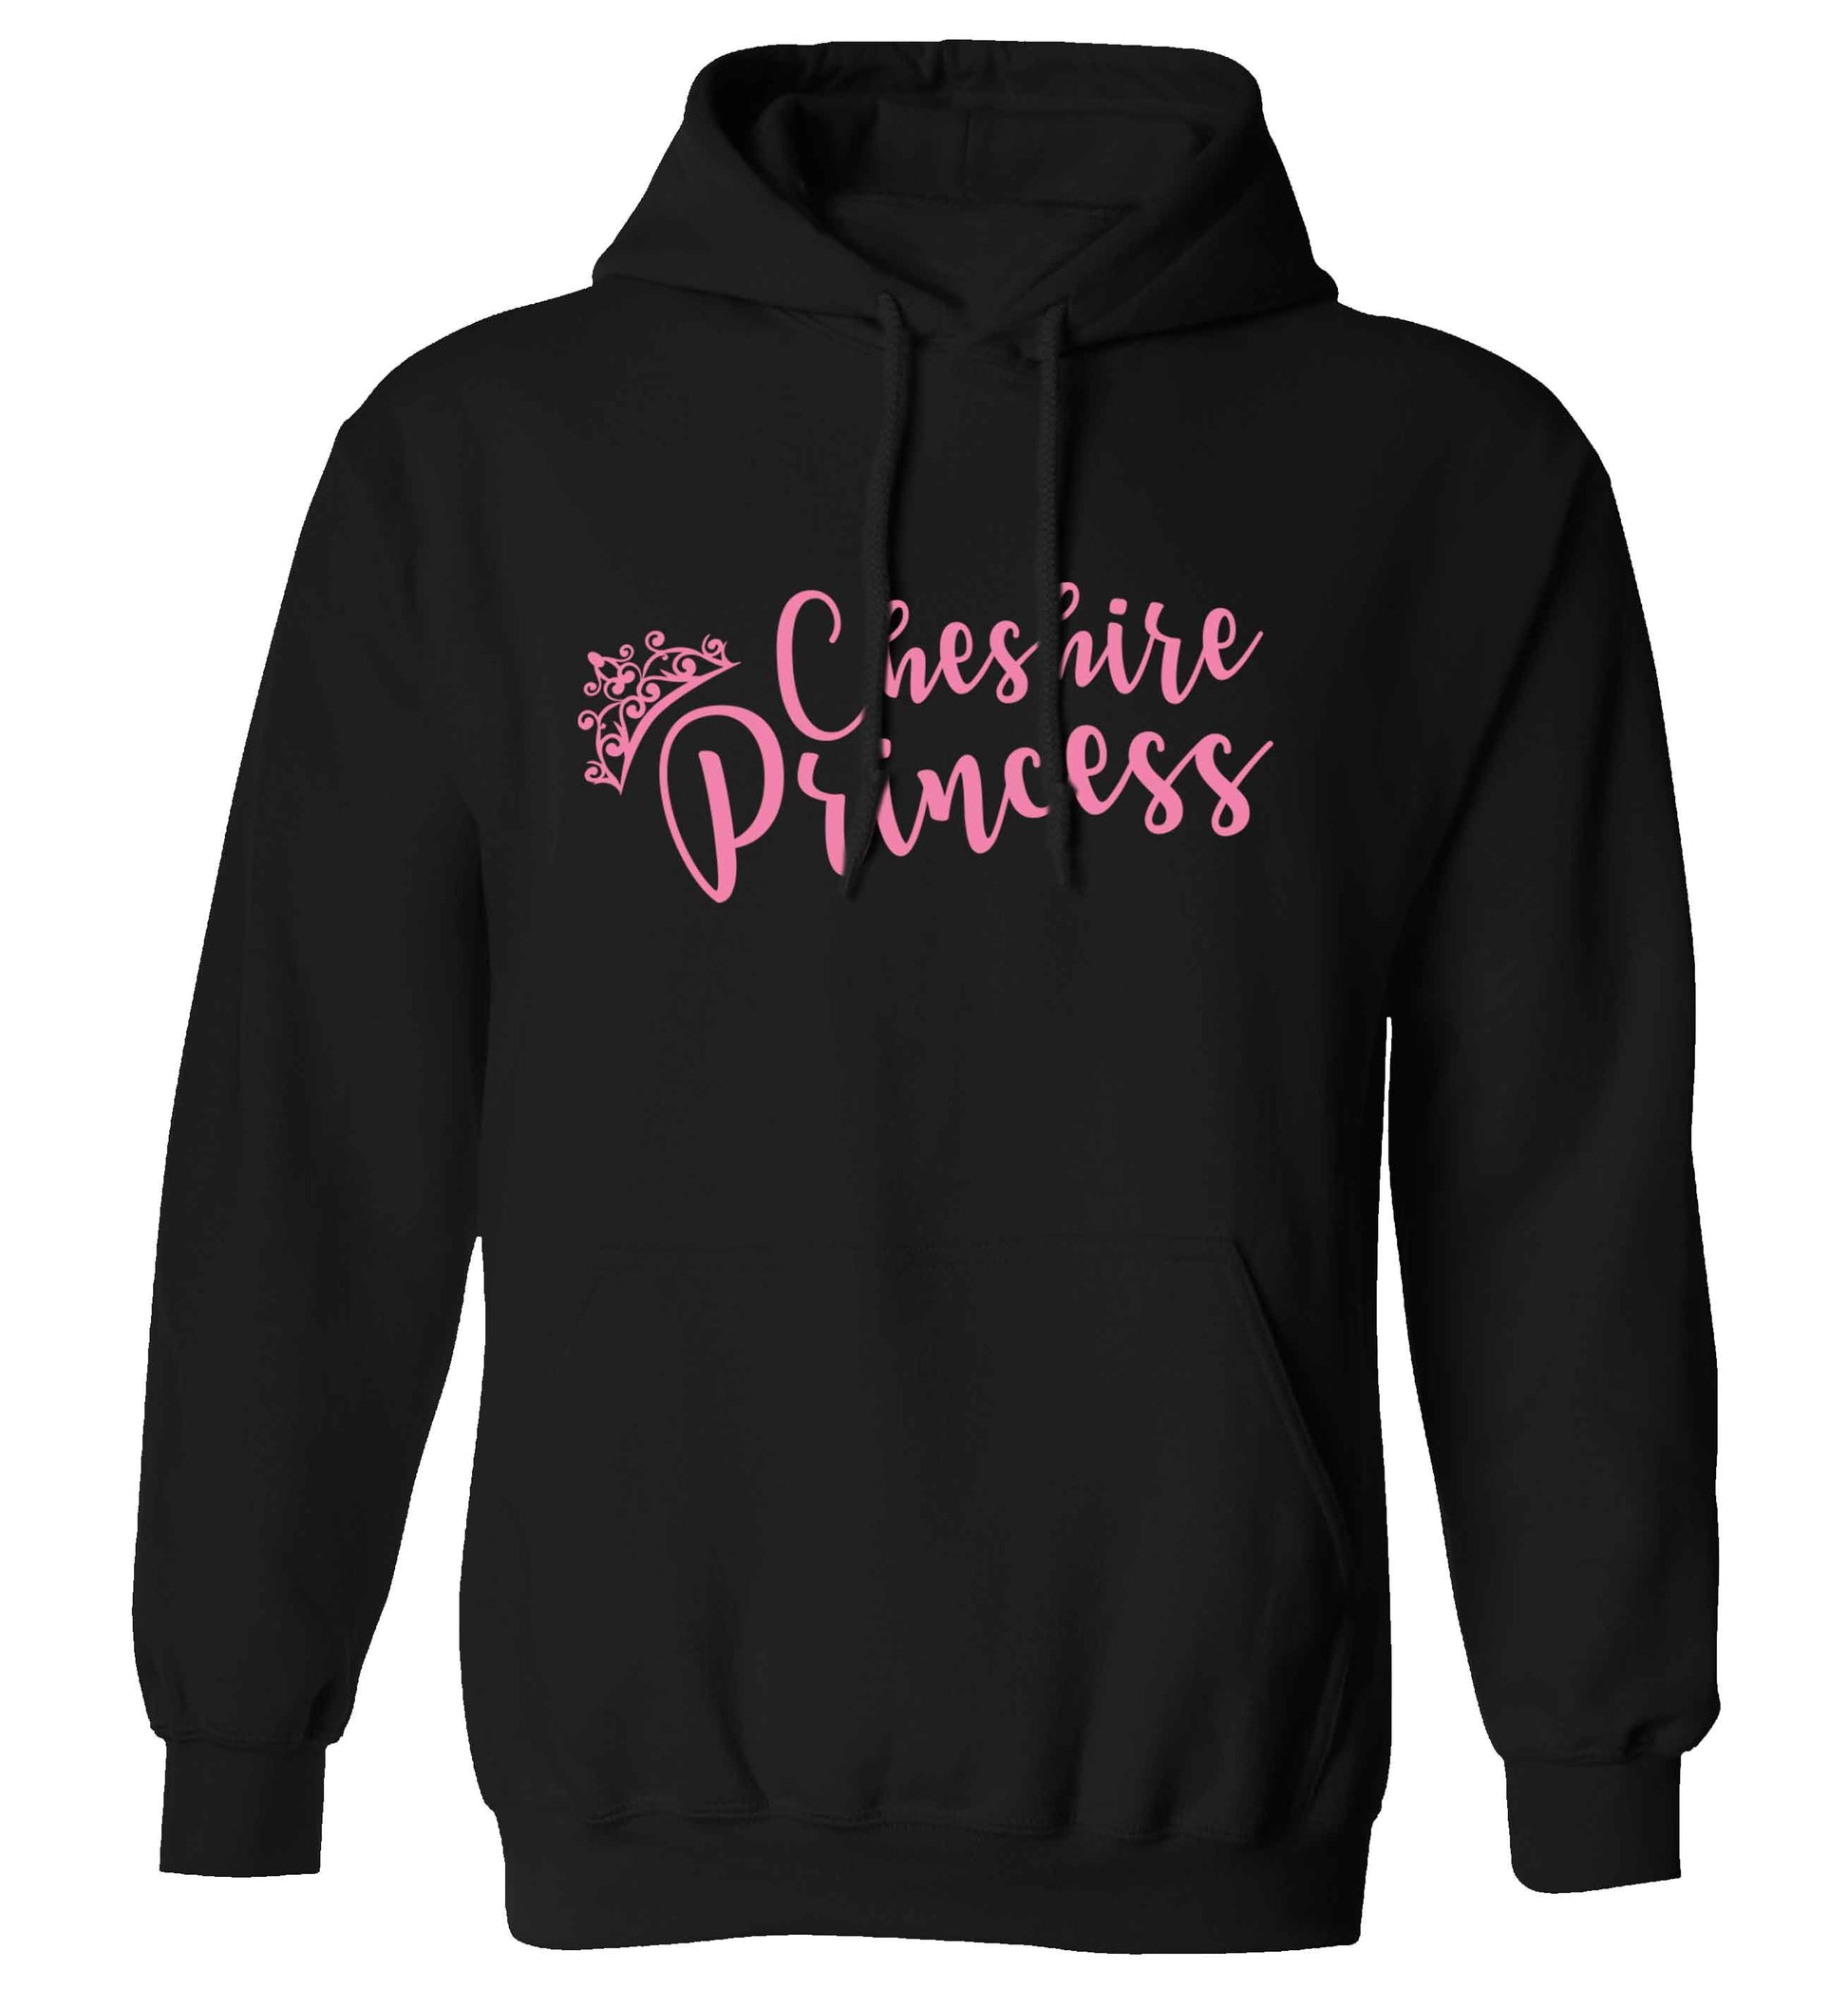 Cheshire princess adults unisex black hoodie 2XL